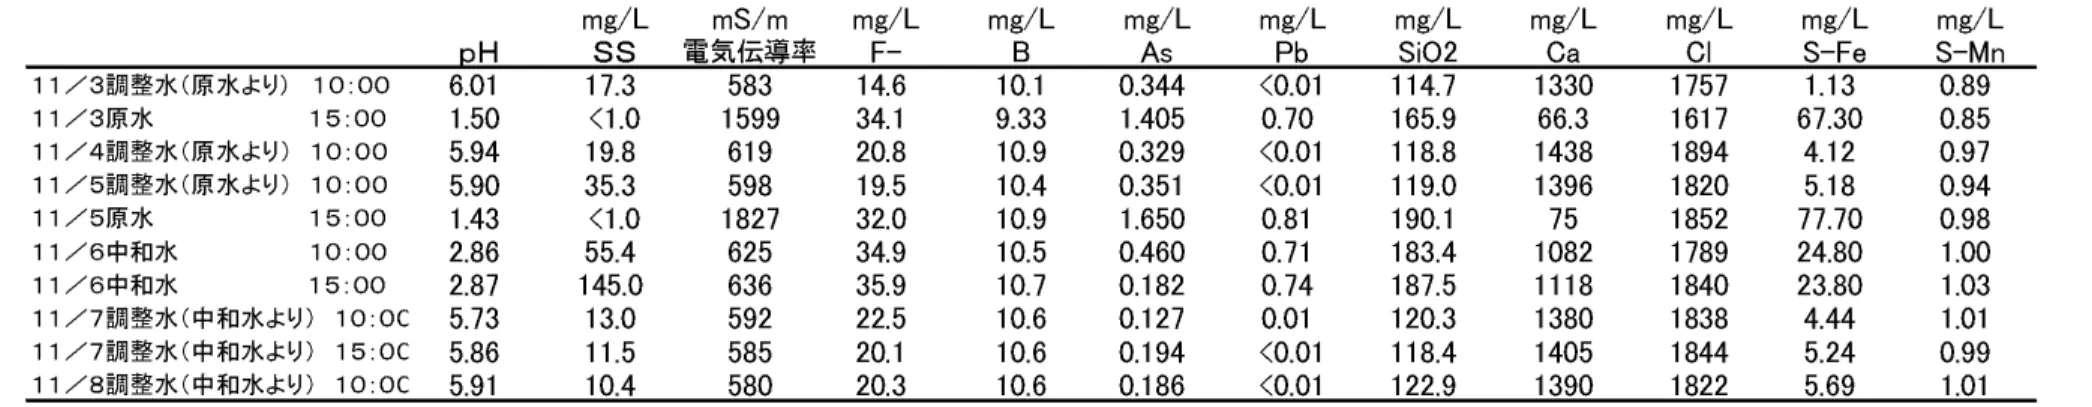 表 5-2  水質監視項目の試験結果（原水・中和水）        表 5-3  水質監視項目の試験結果（処理水）  mg/L mS/m mg/L mg/L mg/L mg/L mg/L mg/L mg/L mg/L mg/LｐＨＳＳ電気伝導率F-BAsPbSiO2CaClS-FeS-Mn１１／３調整水（原水より)　 １０：００6.0117.358314.610.10.344&lt;0.01114.7133017571.130.89１１／３原水　　　　　　　　   １５：００1.50&lt;1.015993